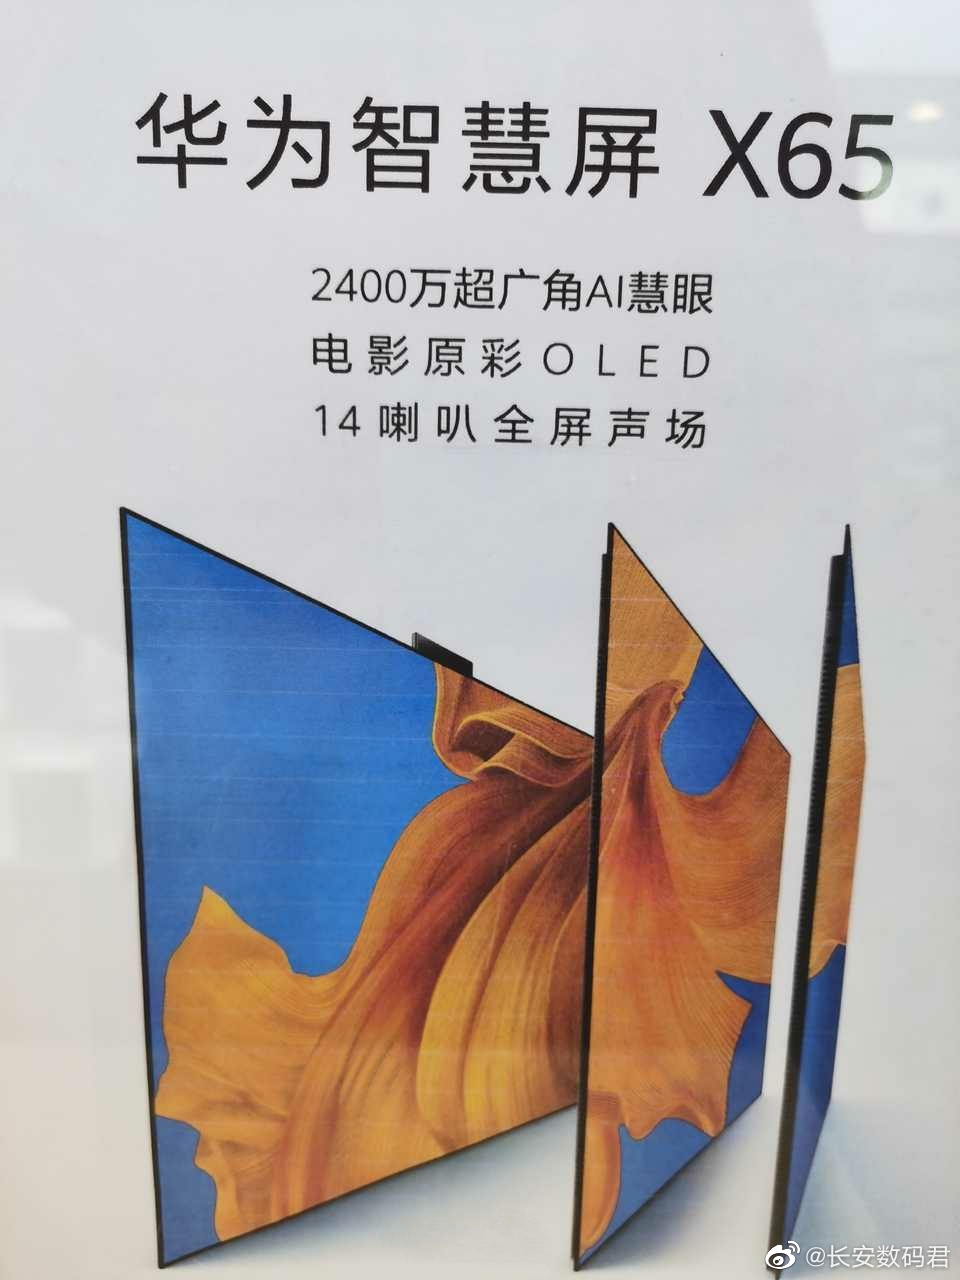 Huawei Smart Screen X65 Poster Leak